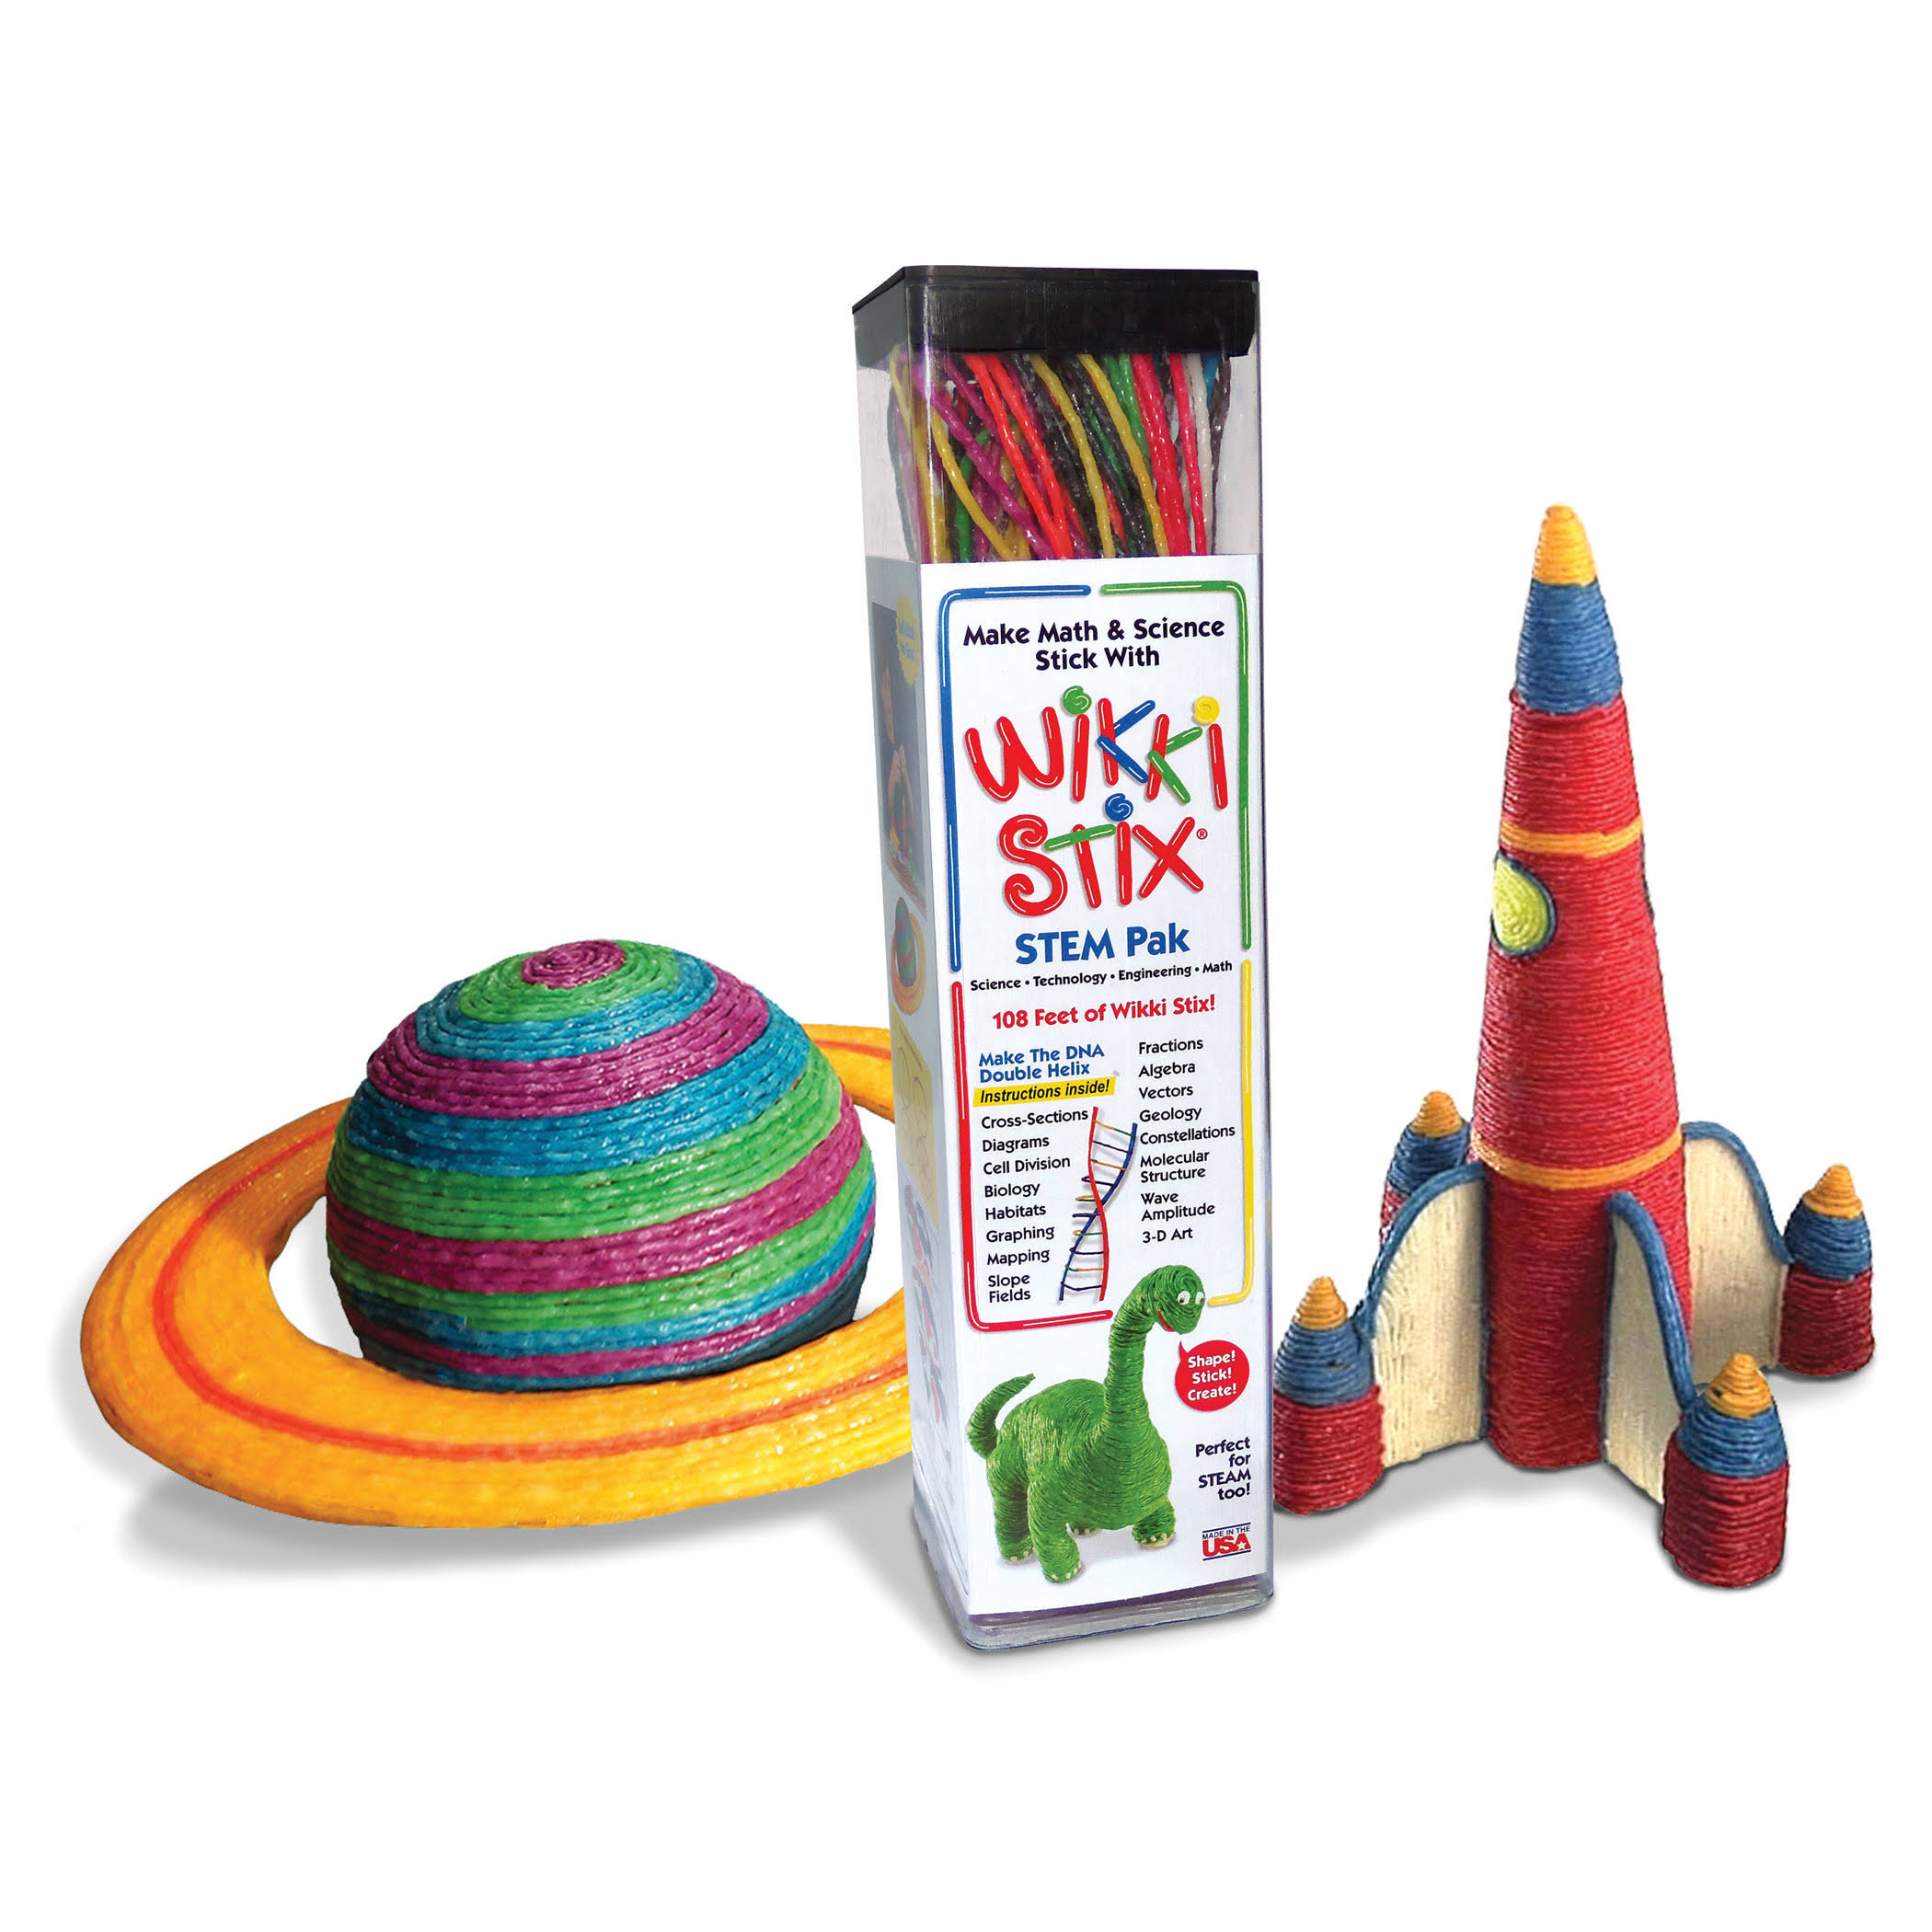 Wikki Stix Stem Pak Science Kit - Molding and Sculpting Sticks